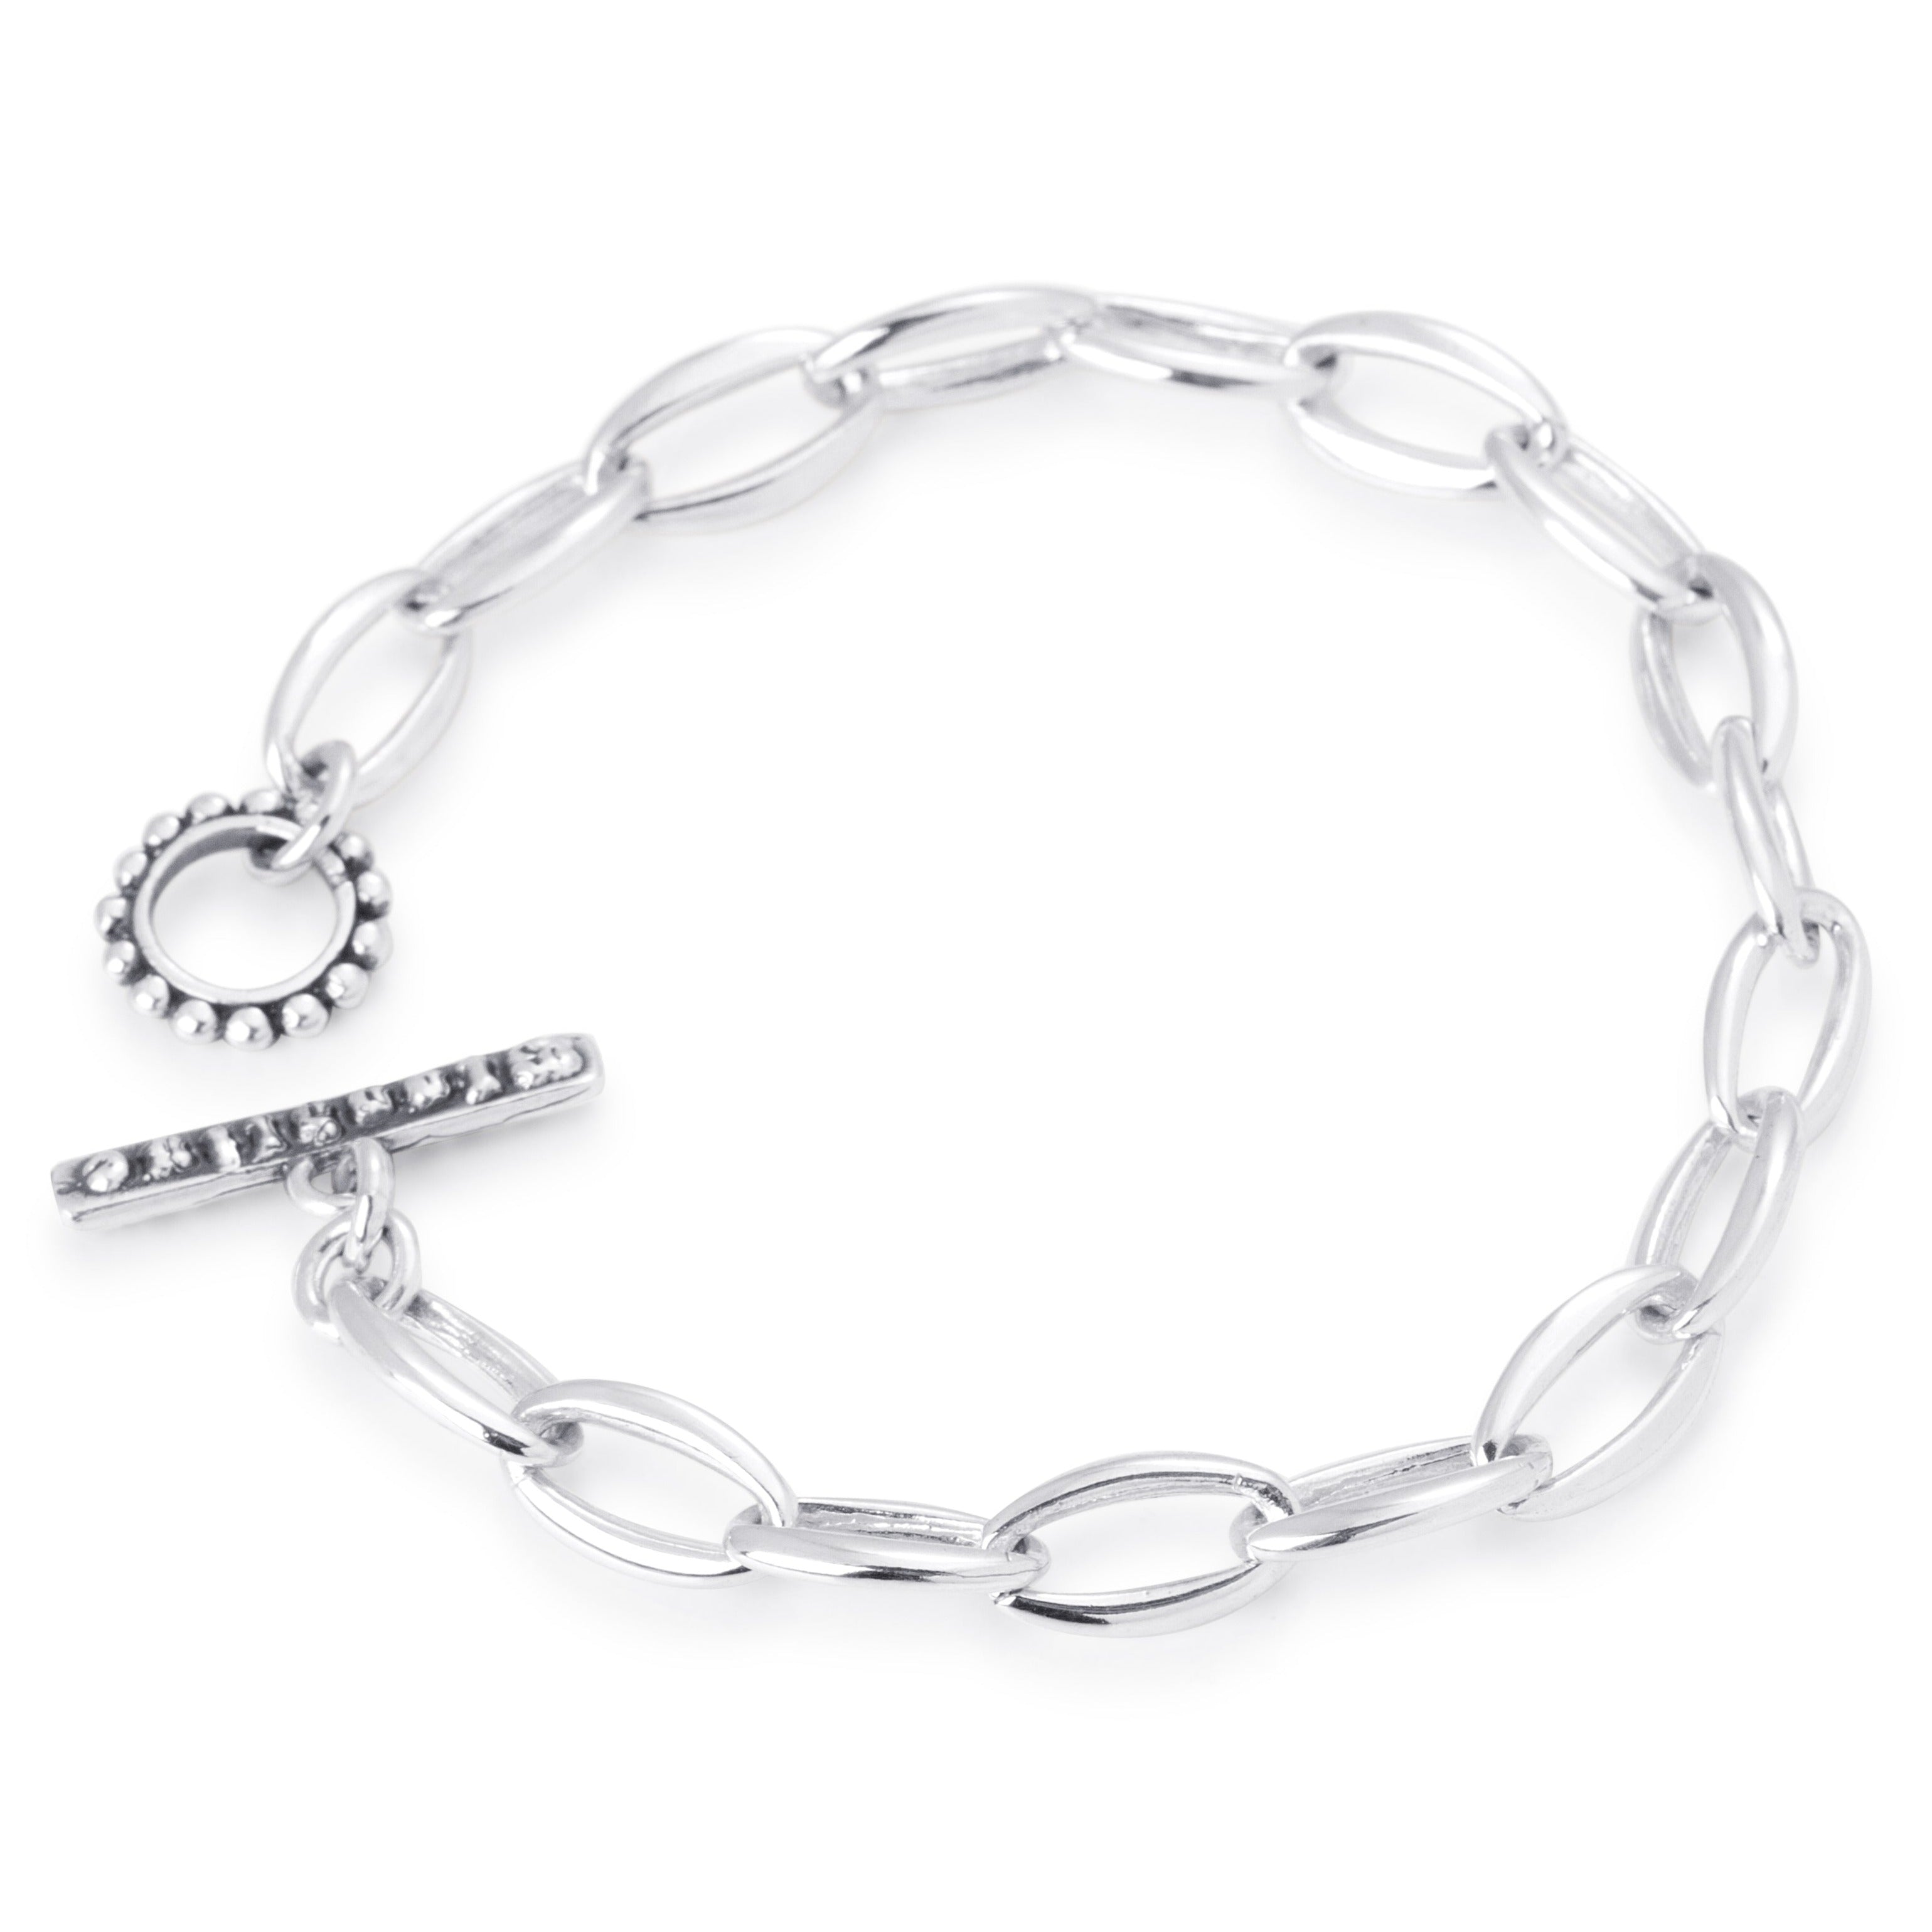 Manhattan Link Chain Bracelet in Sterling Silver, 8.5mm